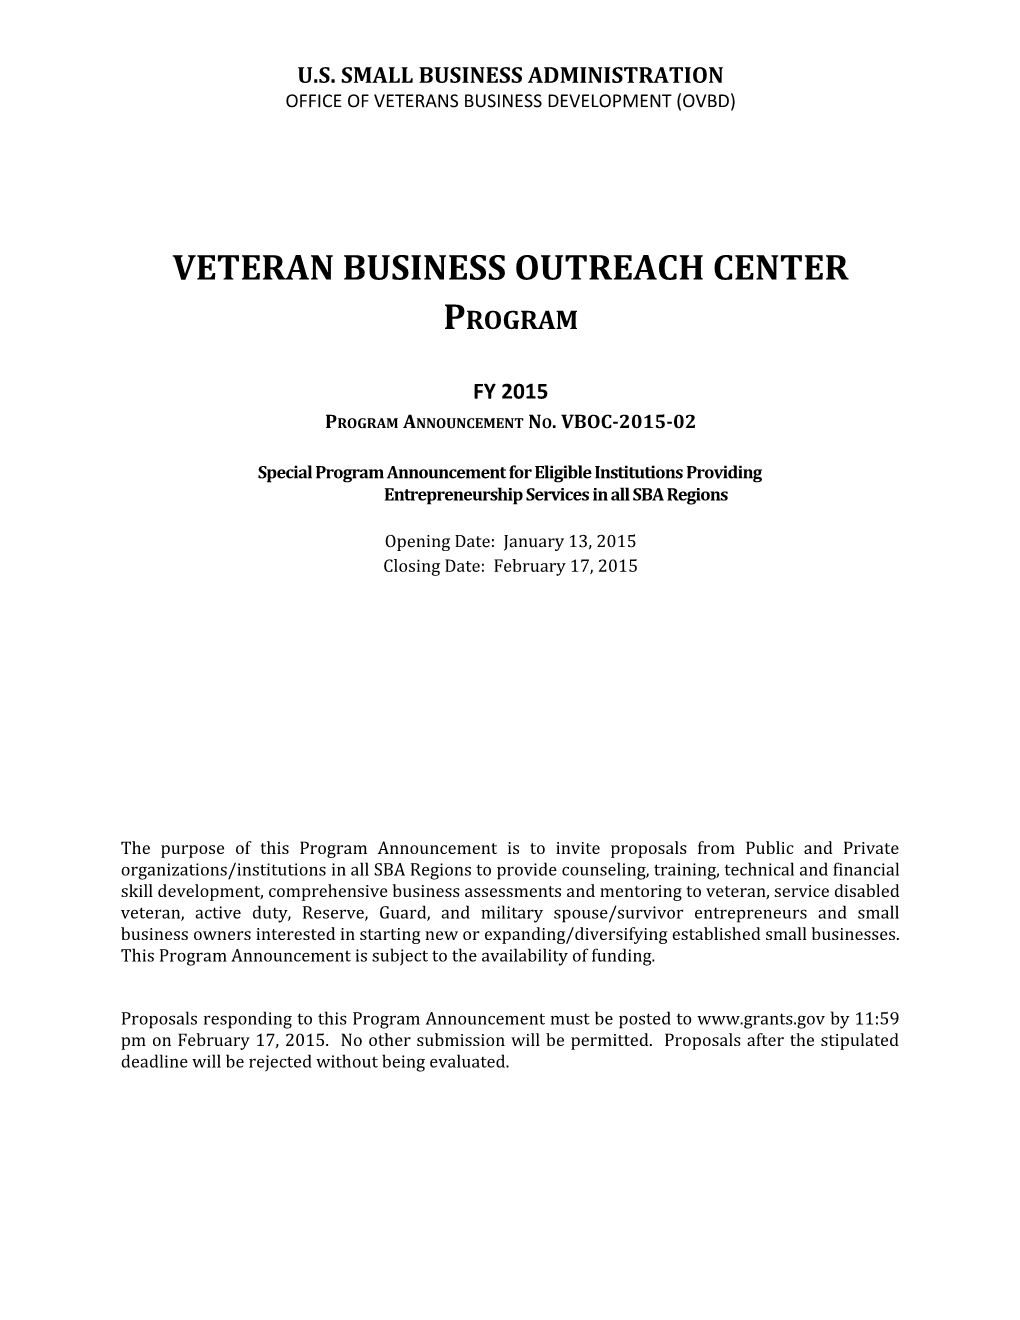 Veteran Business Outreach Center Program